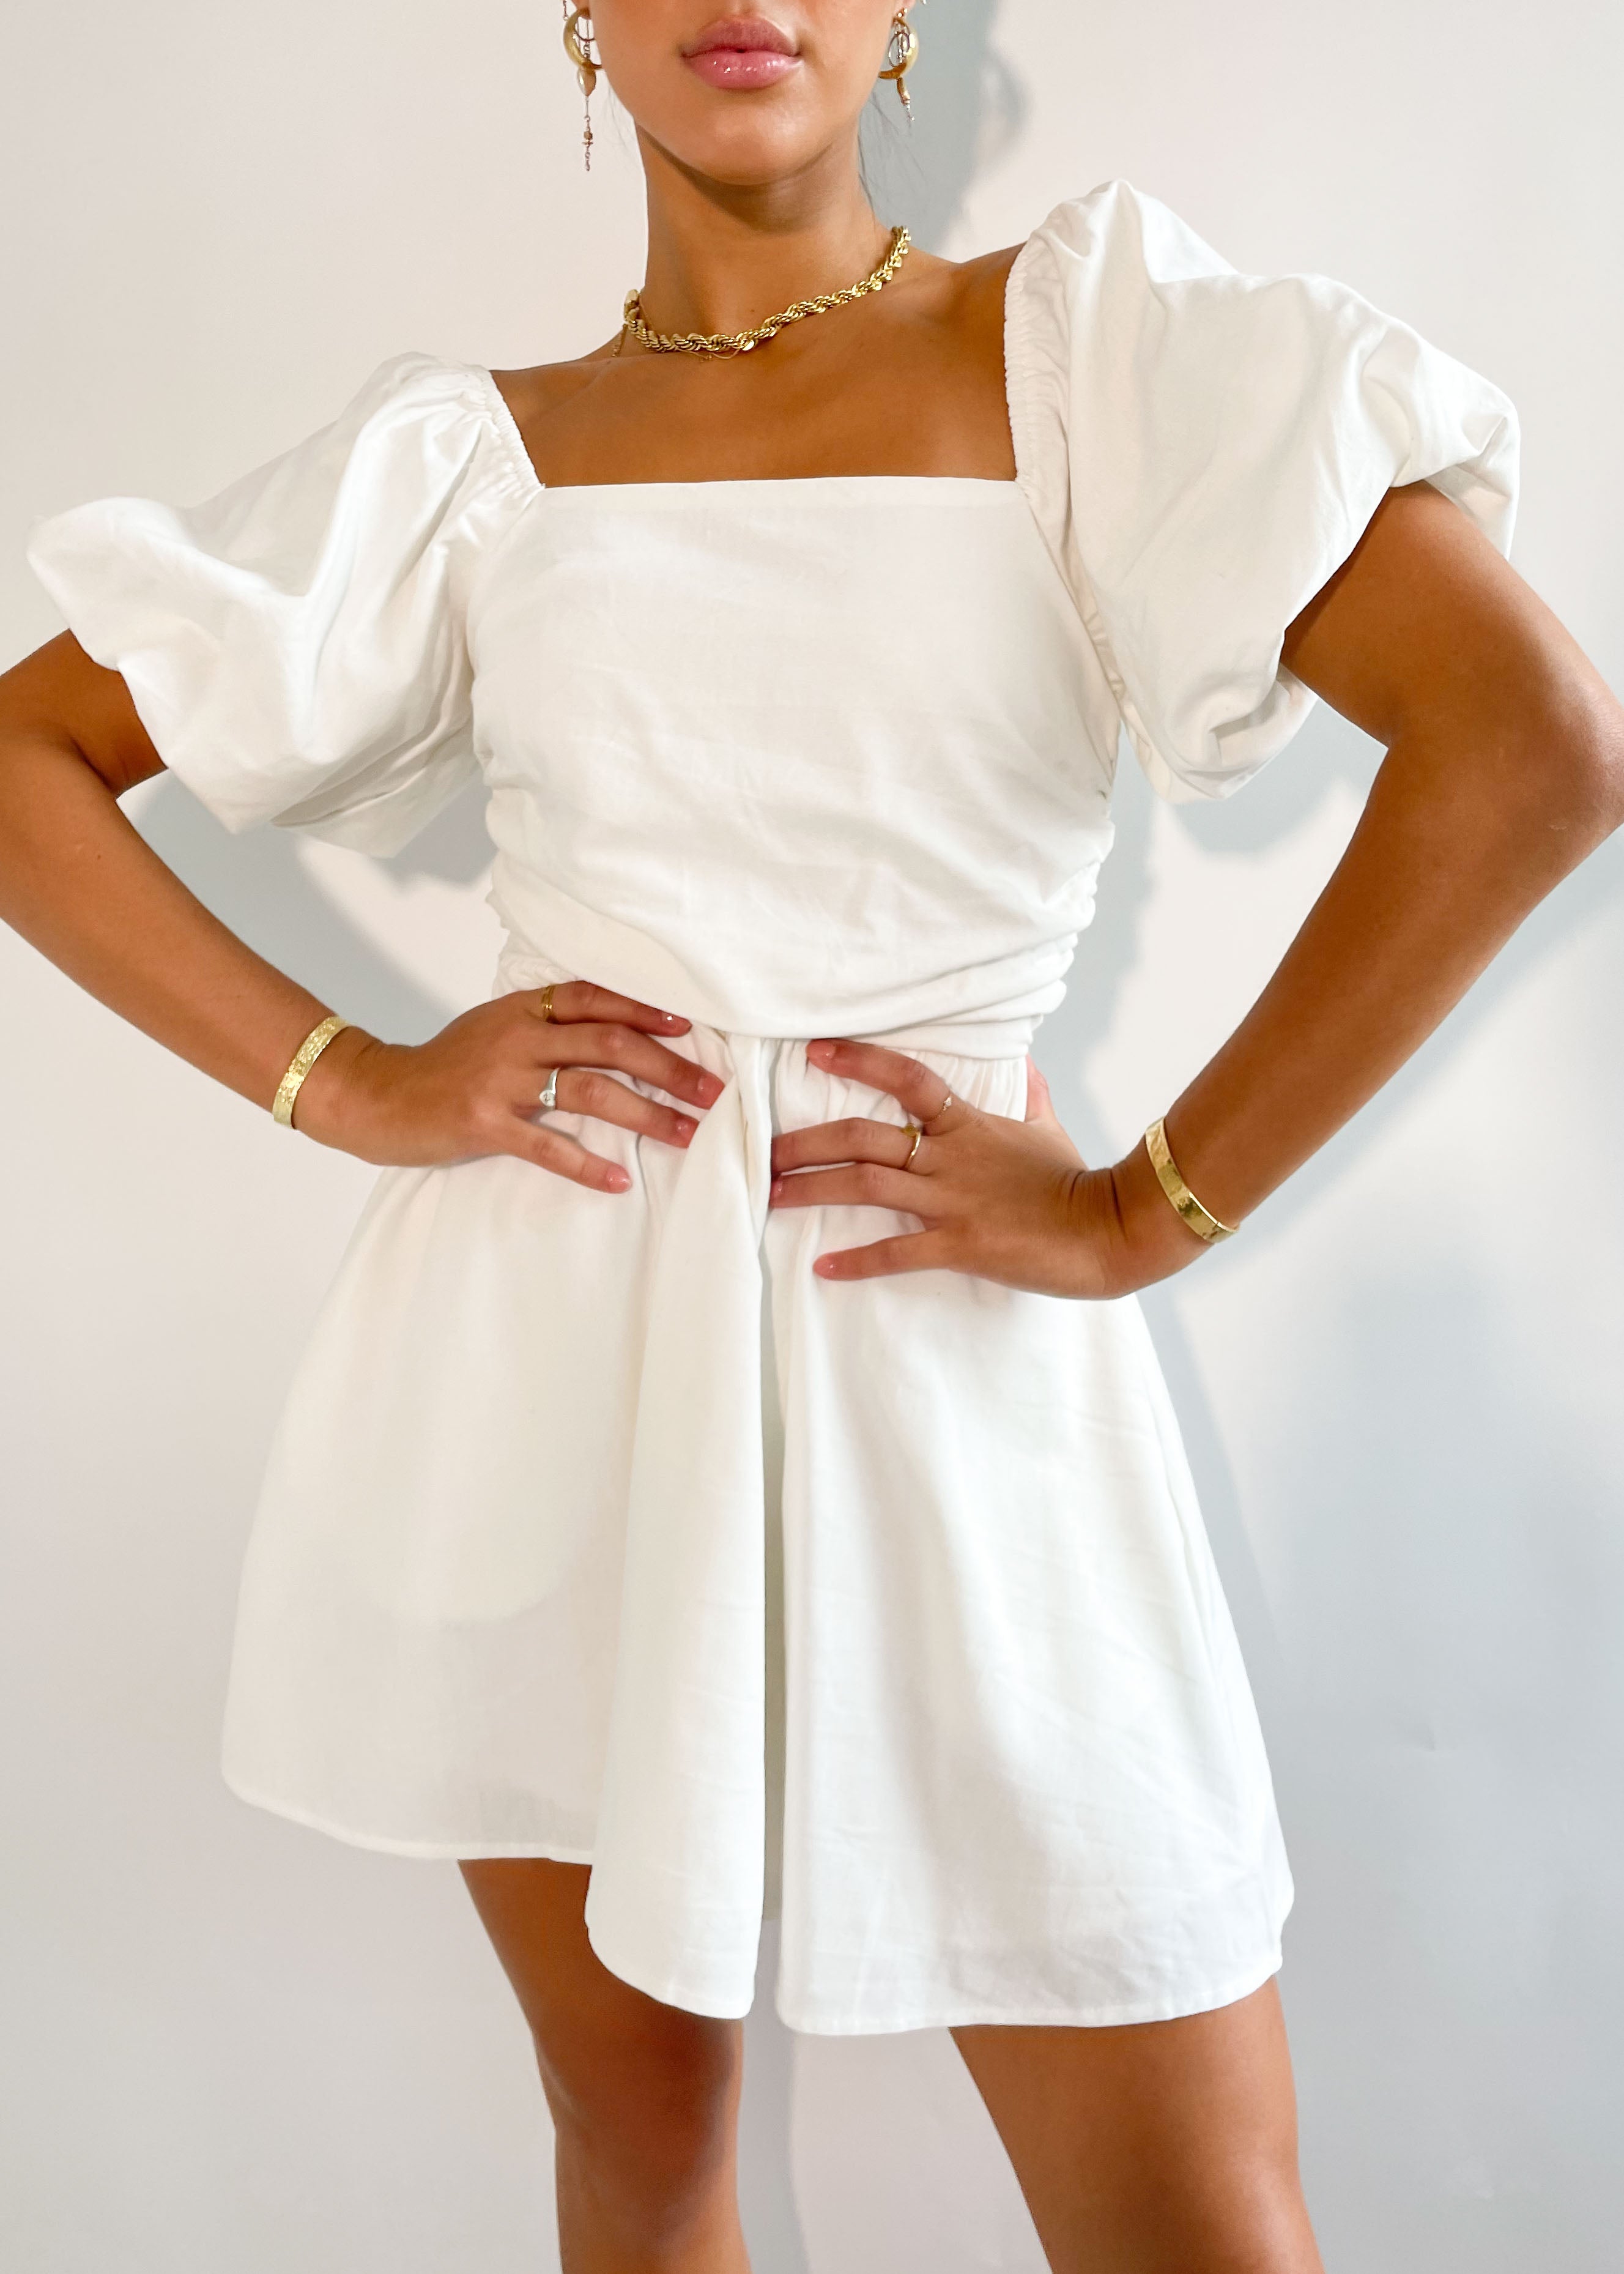 Marloe Dress - Off White